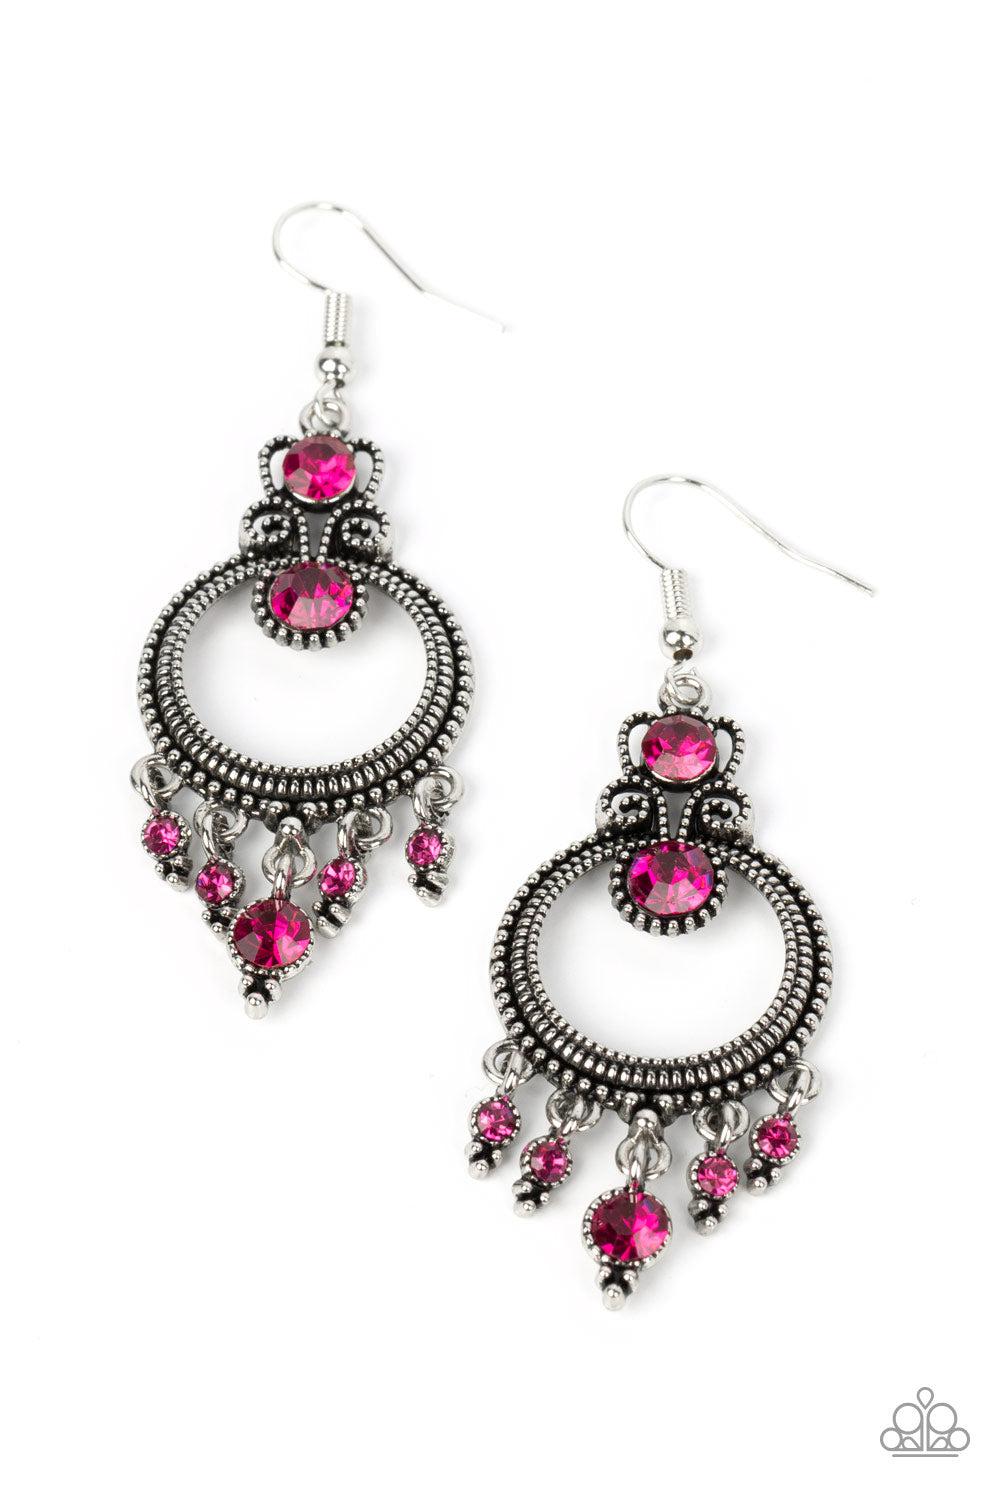 Palace Politics Pink Rhinestone Earrings - Paparazzi Accessories- lightbox - CarasShop.com - $5 Jewelry by Cara Jewels